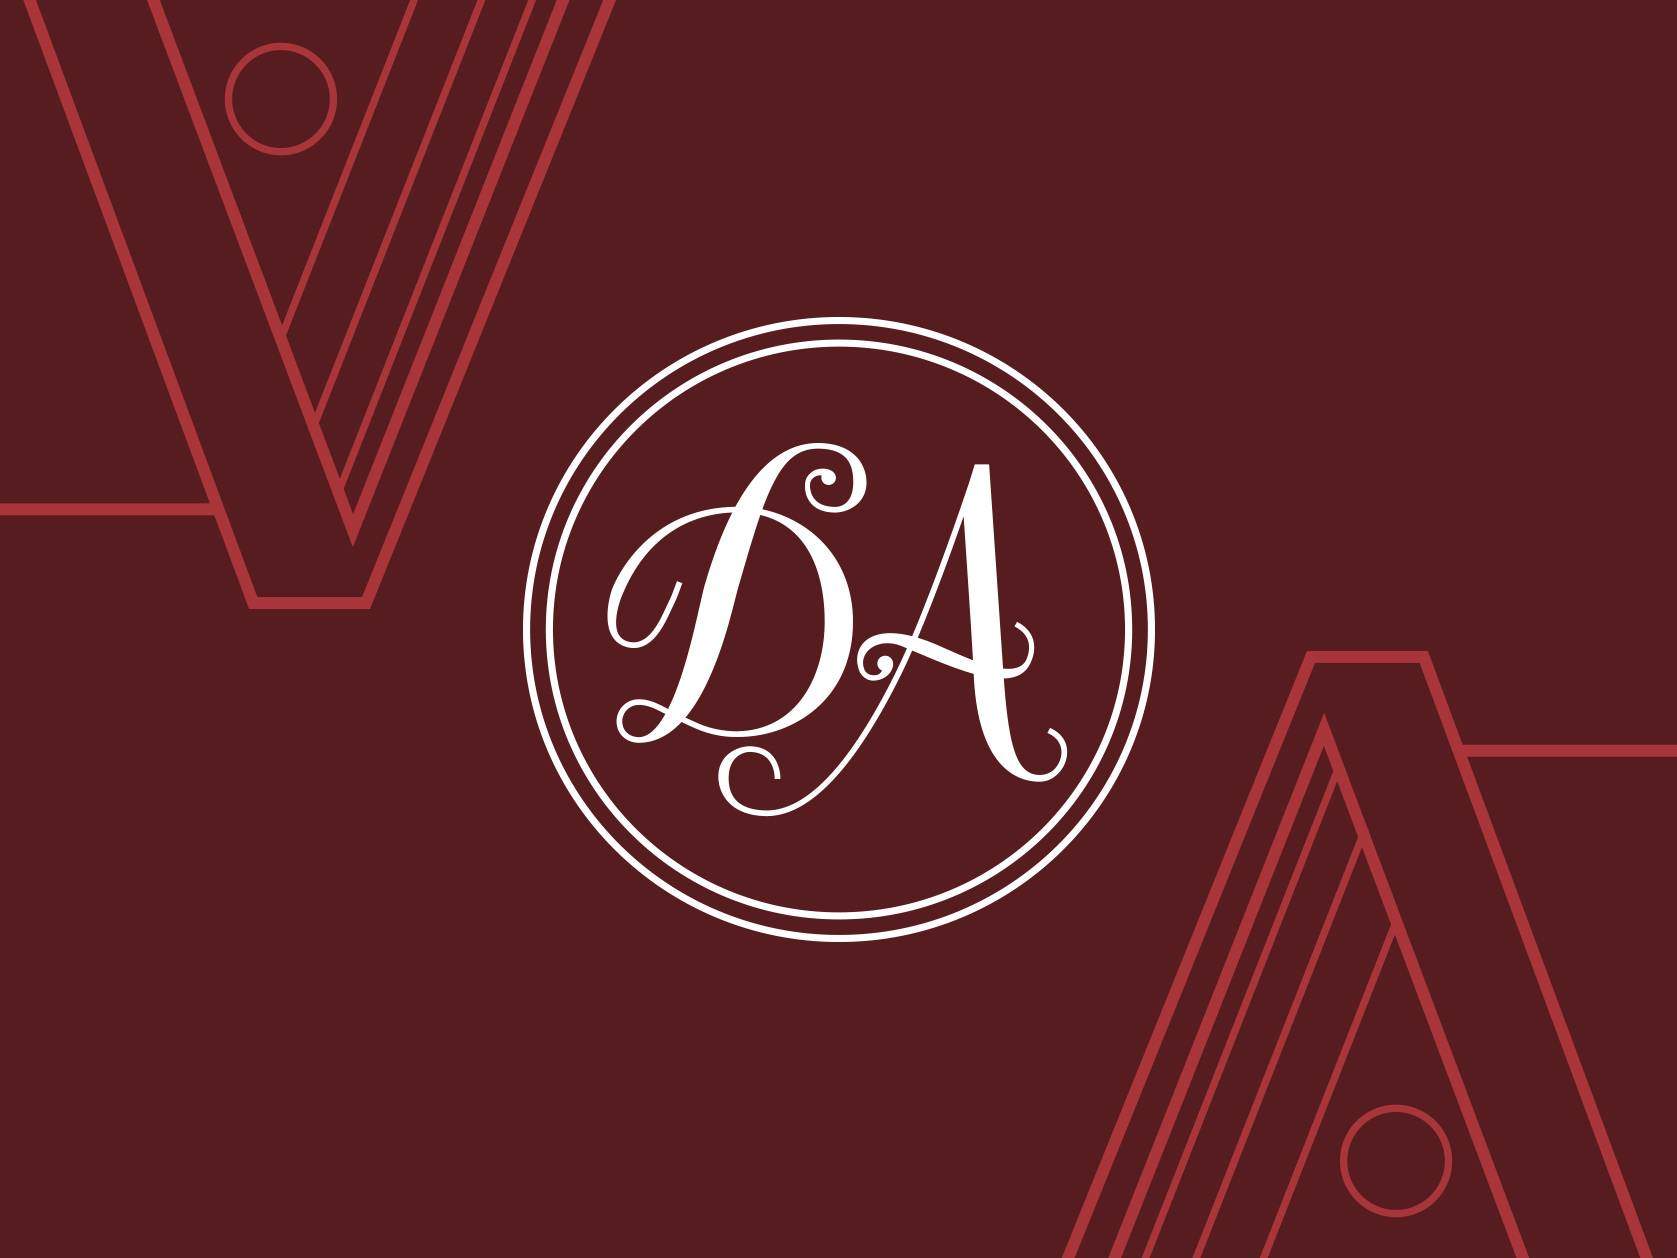 distinguished alumni gala logo